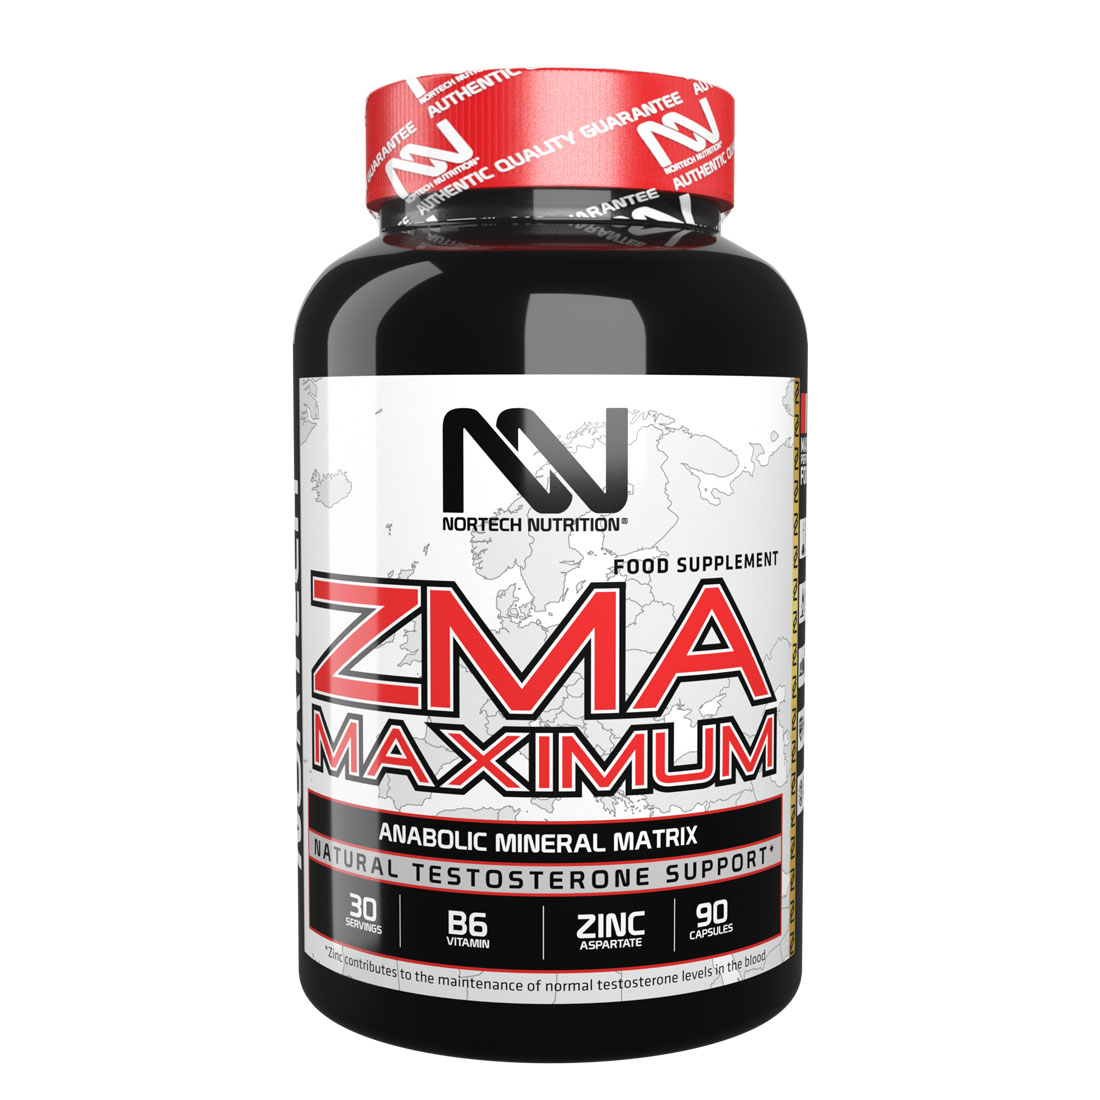 ZMA Tech - Zinc, Magnesium, & Vitamin B6 (180 Capsules) by